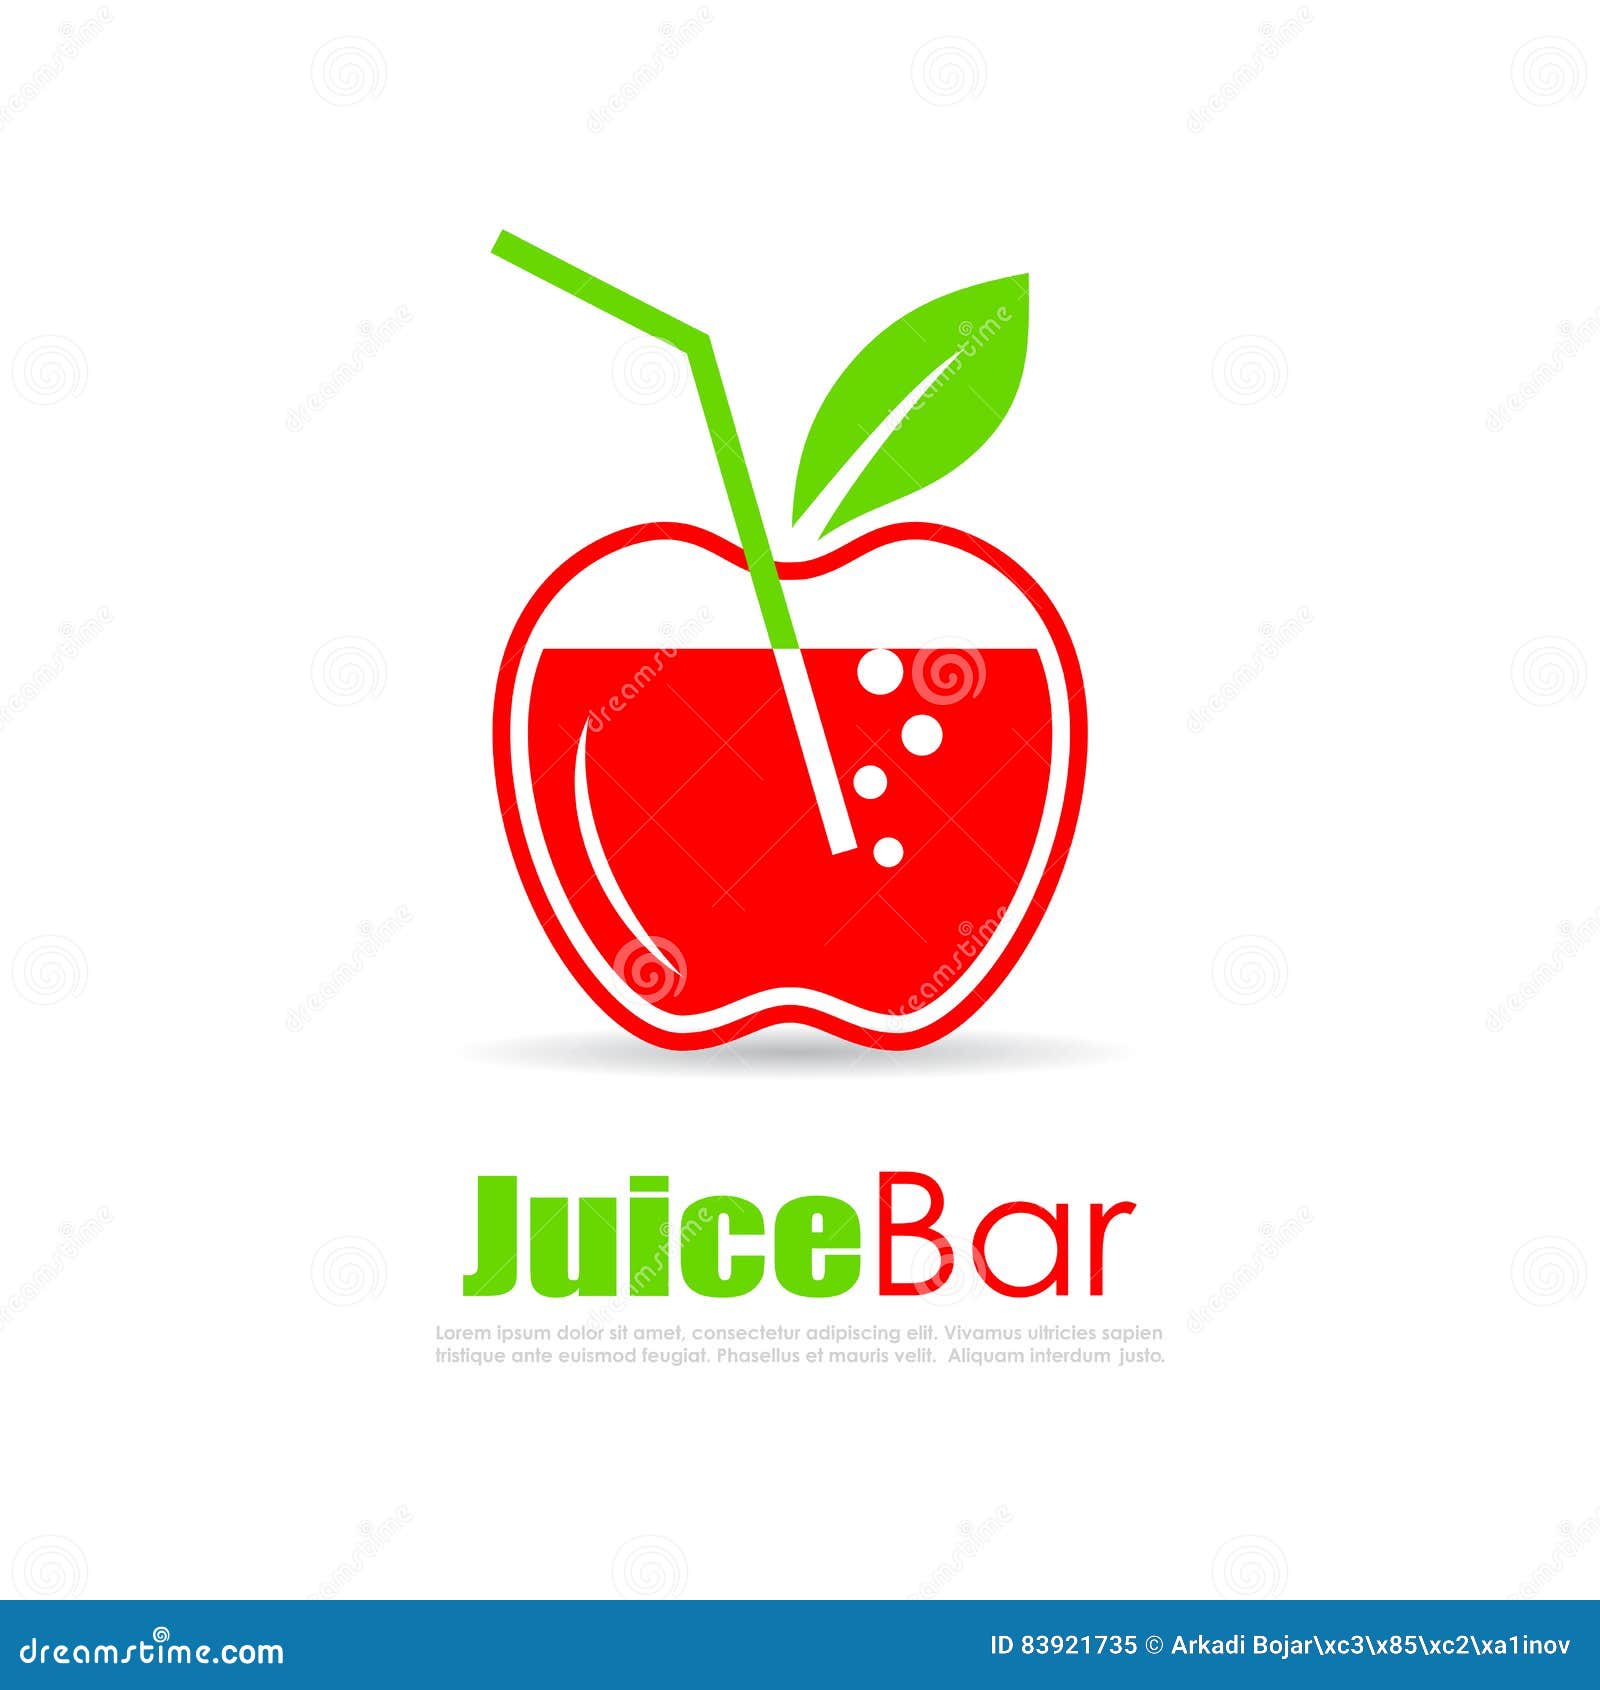 juice bar clipart - photo #11